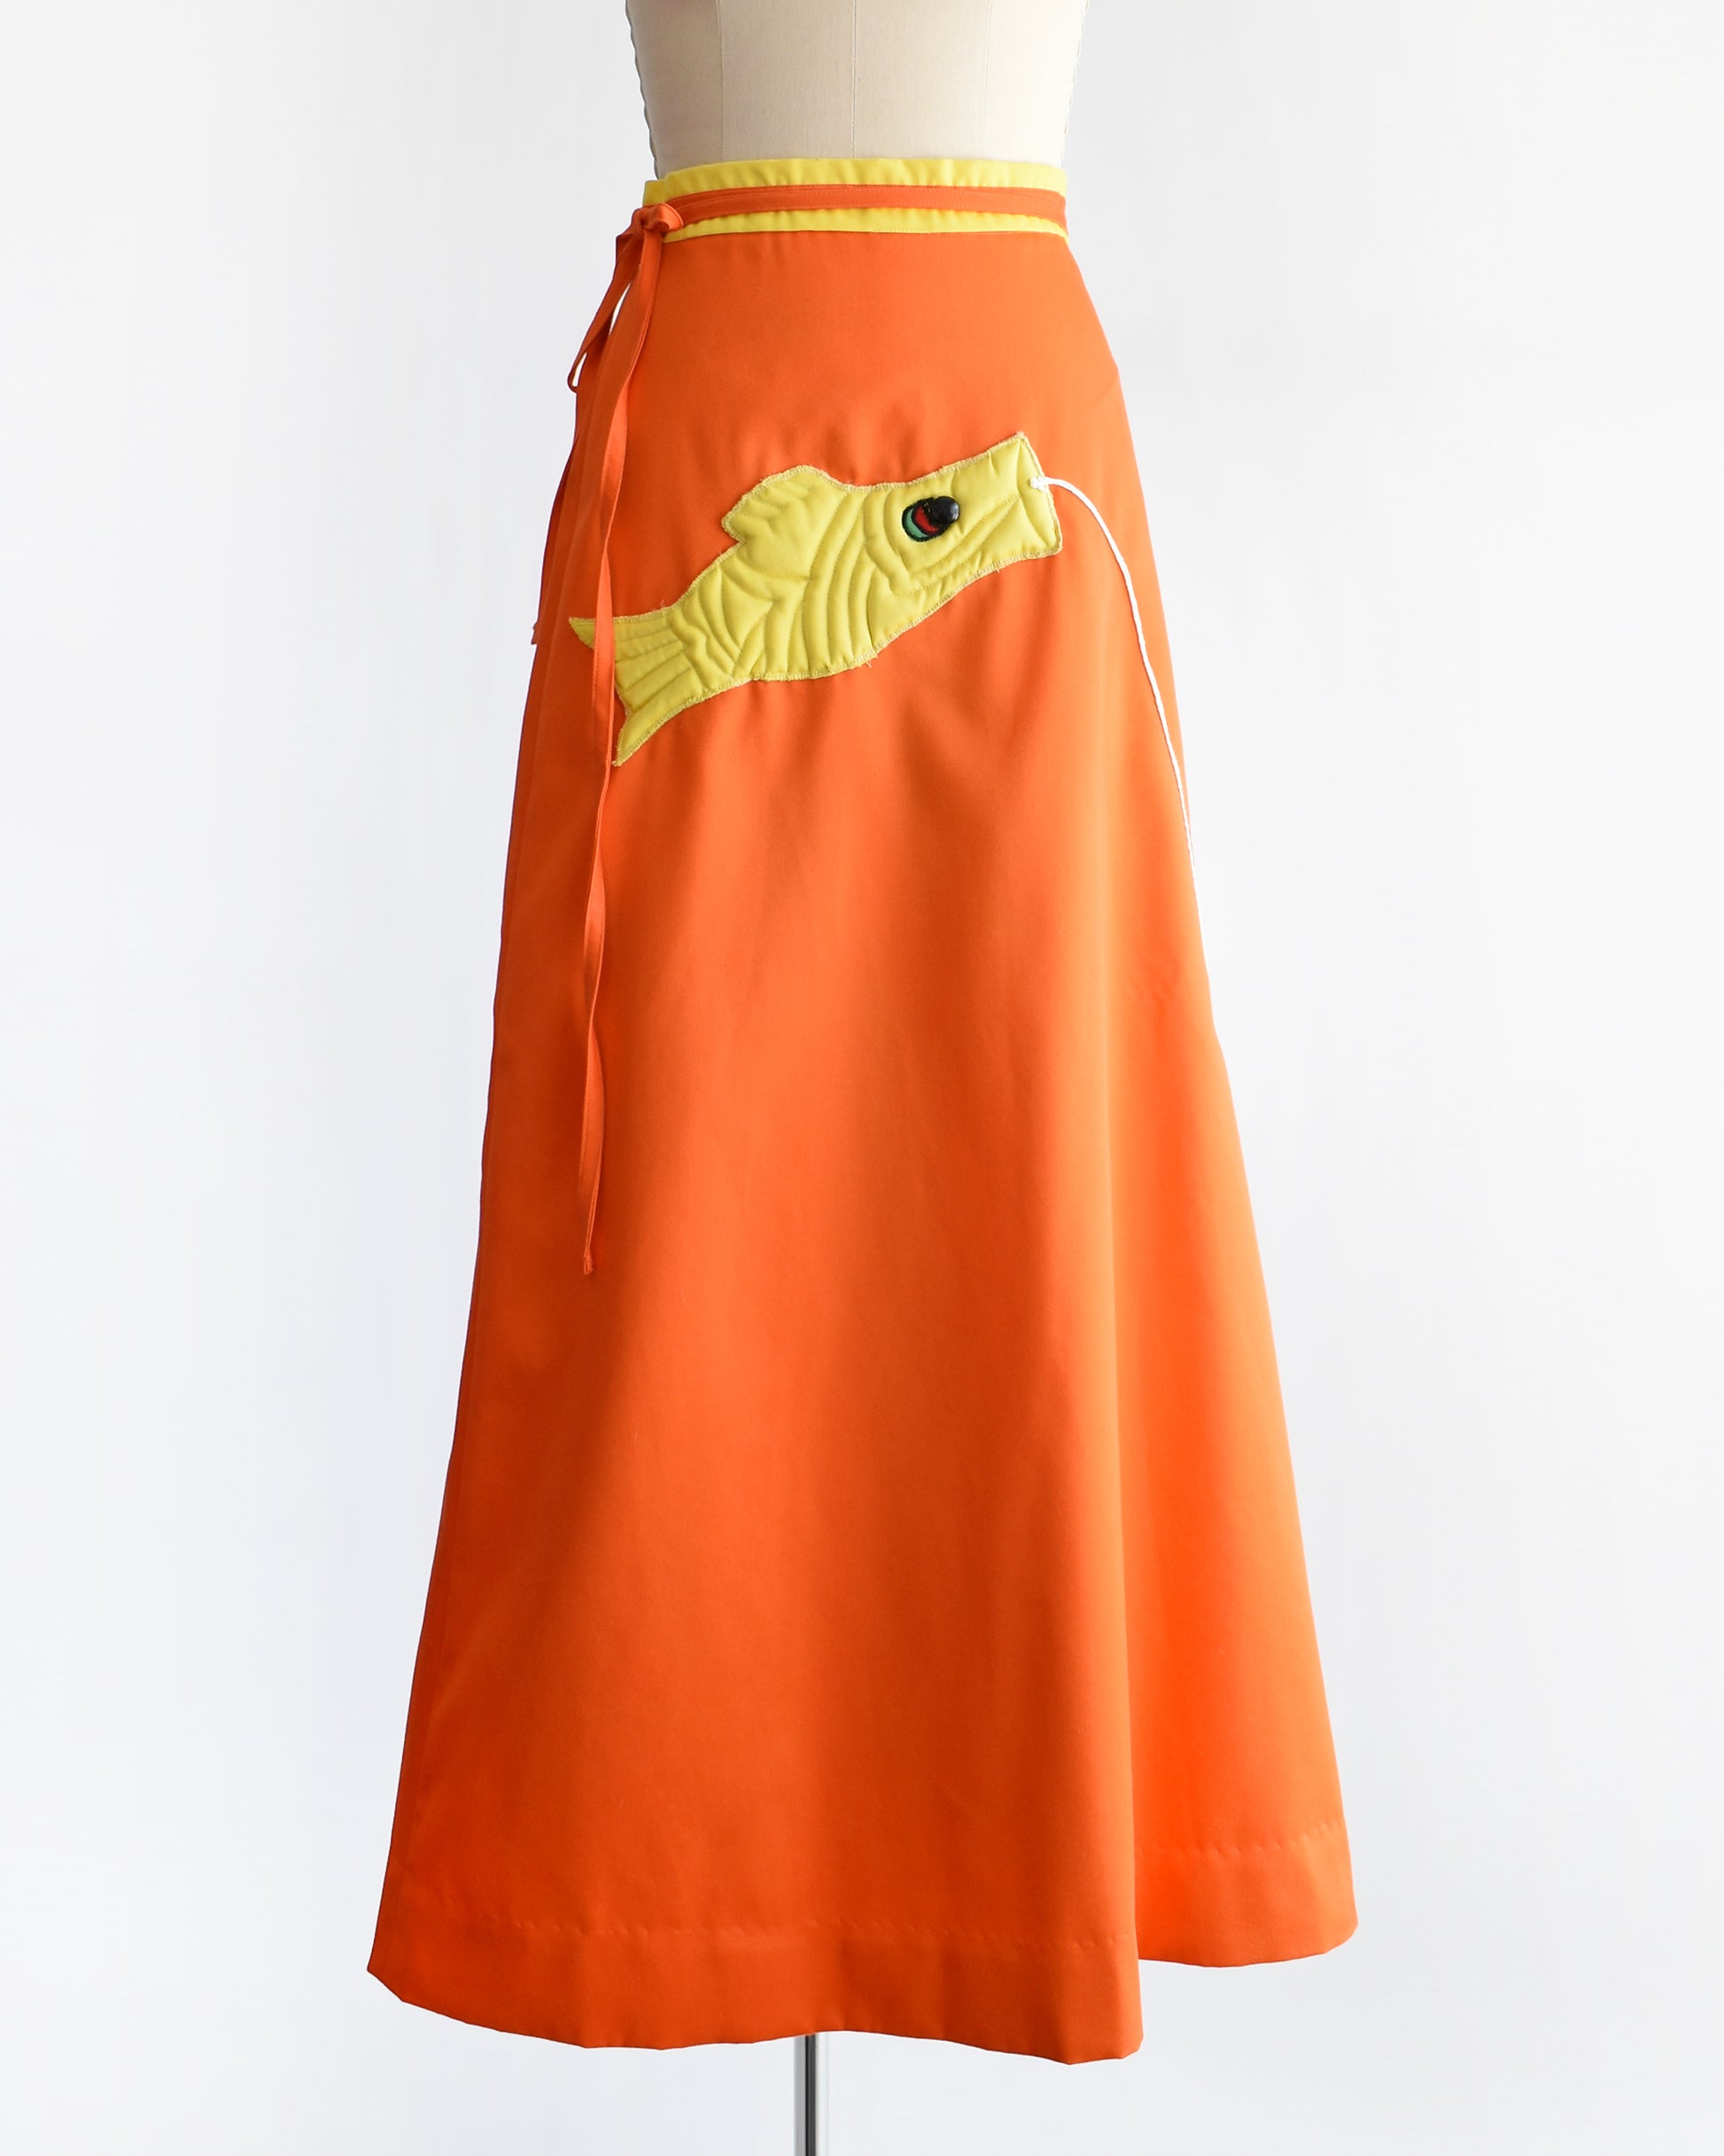 A vintage 1970s fish kite appliqué orange and yellow wrap skirt.